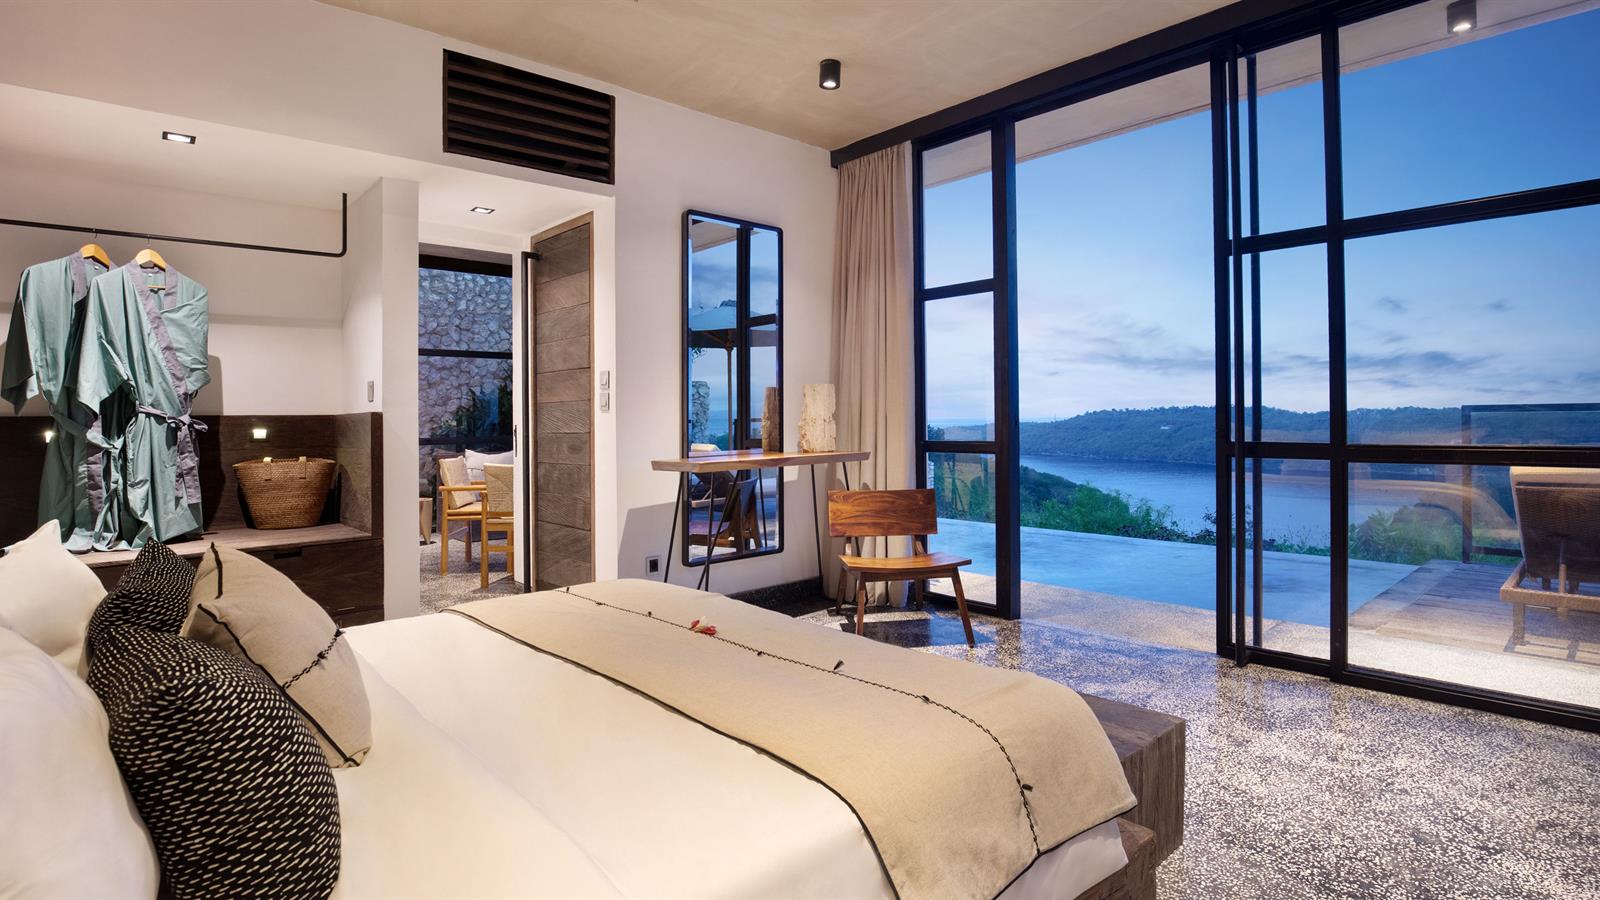 New 5-star resort located on Nusa Penida island, nestled on the hilltop of Gamat Bay.